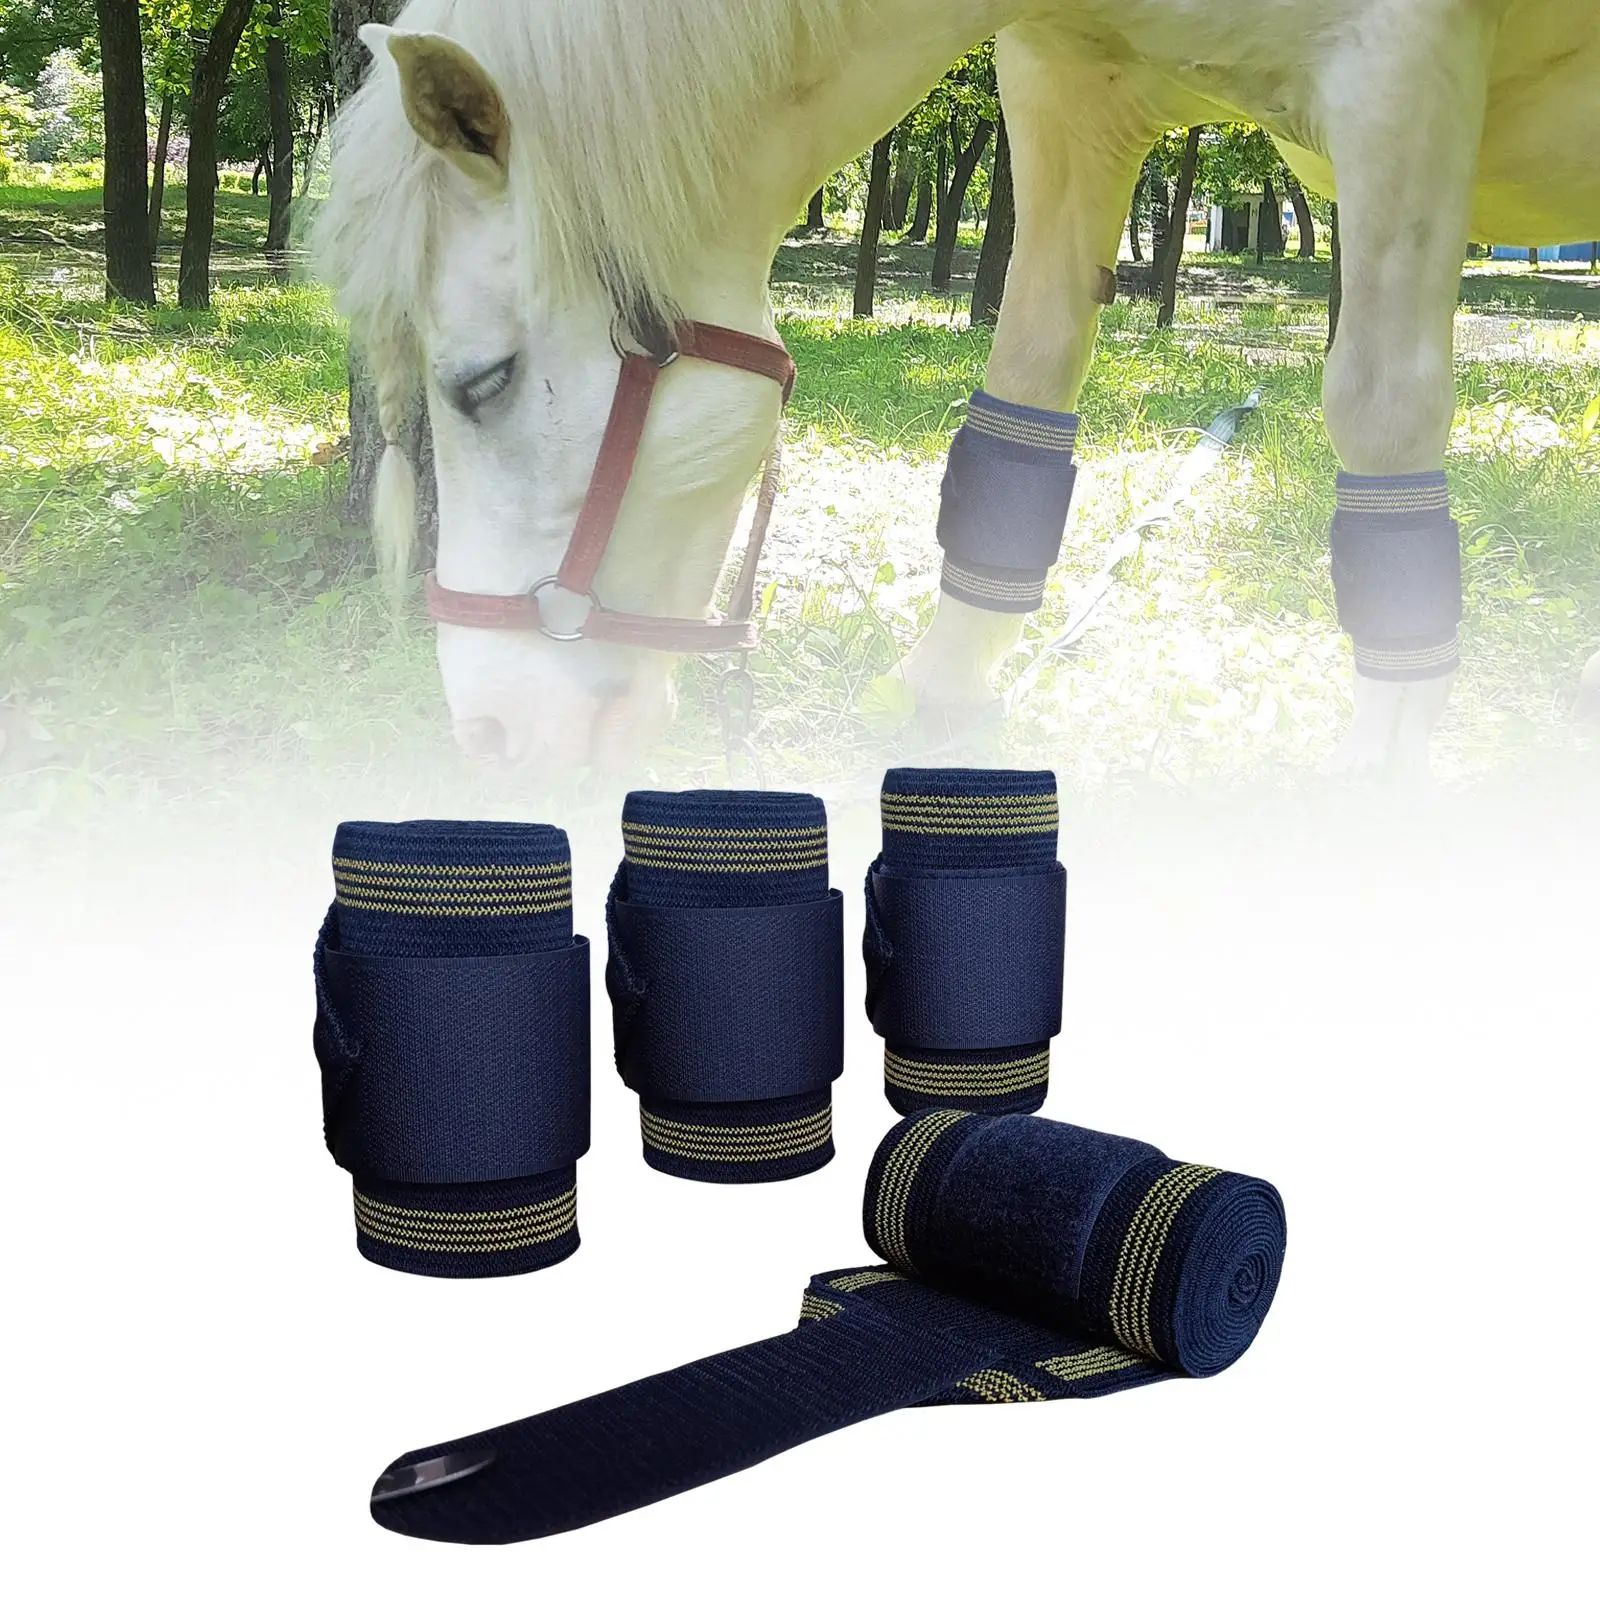 4x Horse Leg Wraps Sticky Strap Leg Protection Belt Leg Guards for Training